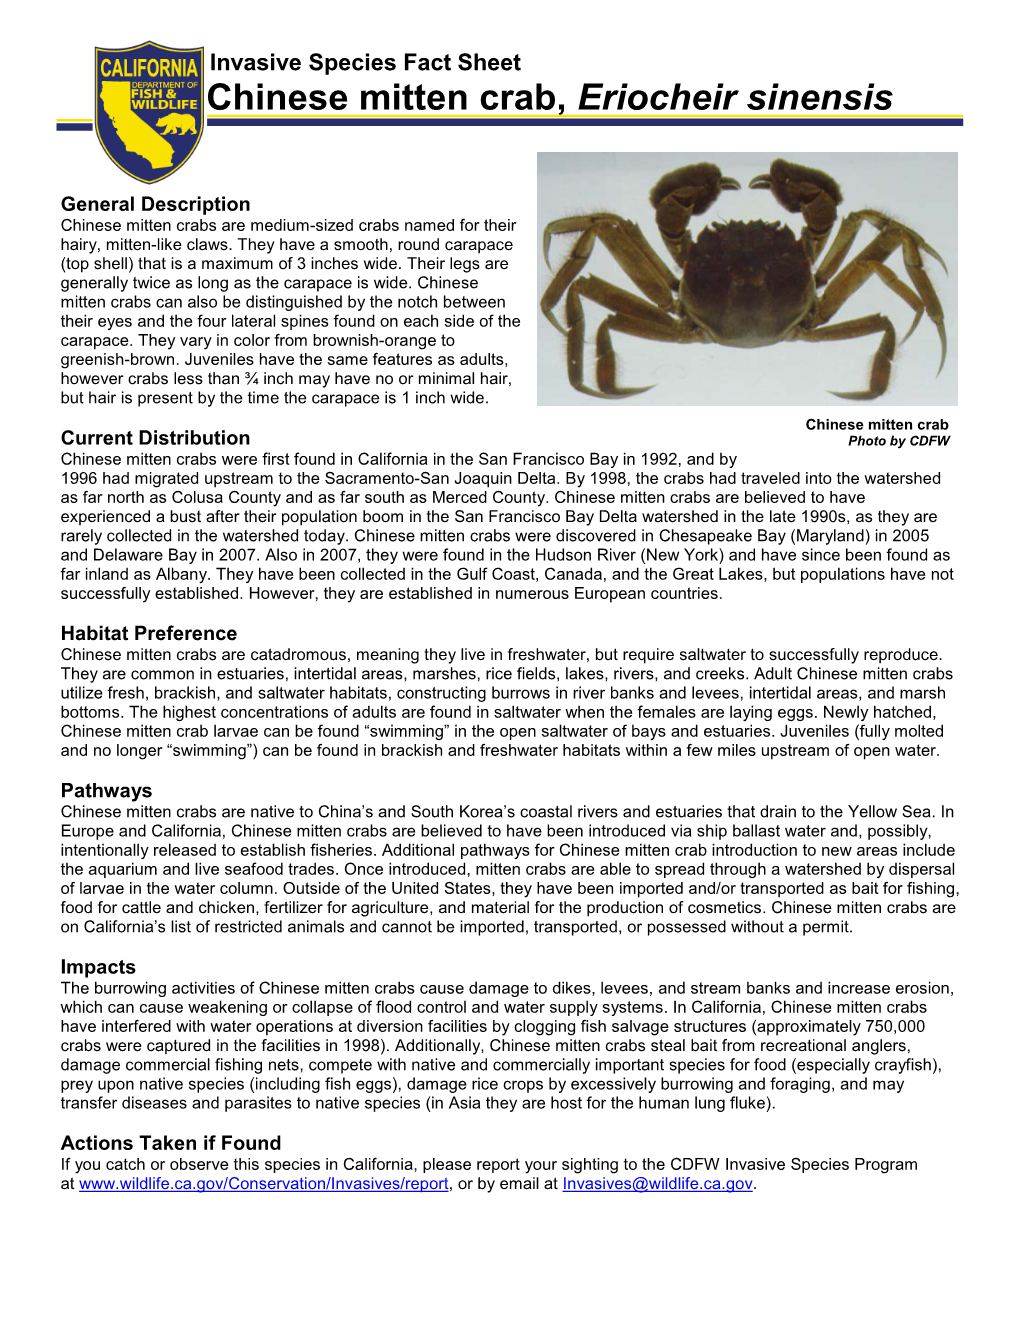 Fact Sheet Chinese Mitten Crab, Eriocheir Sinensis